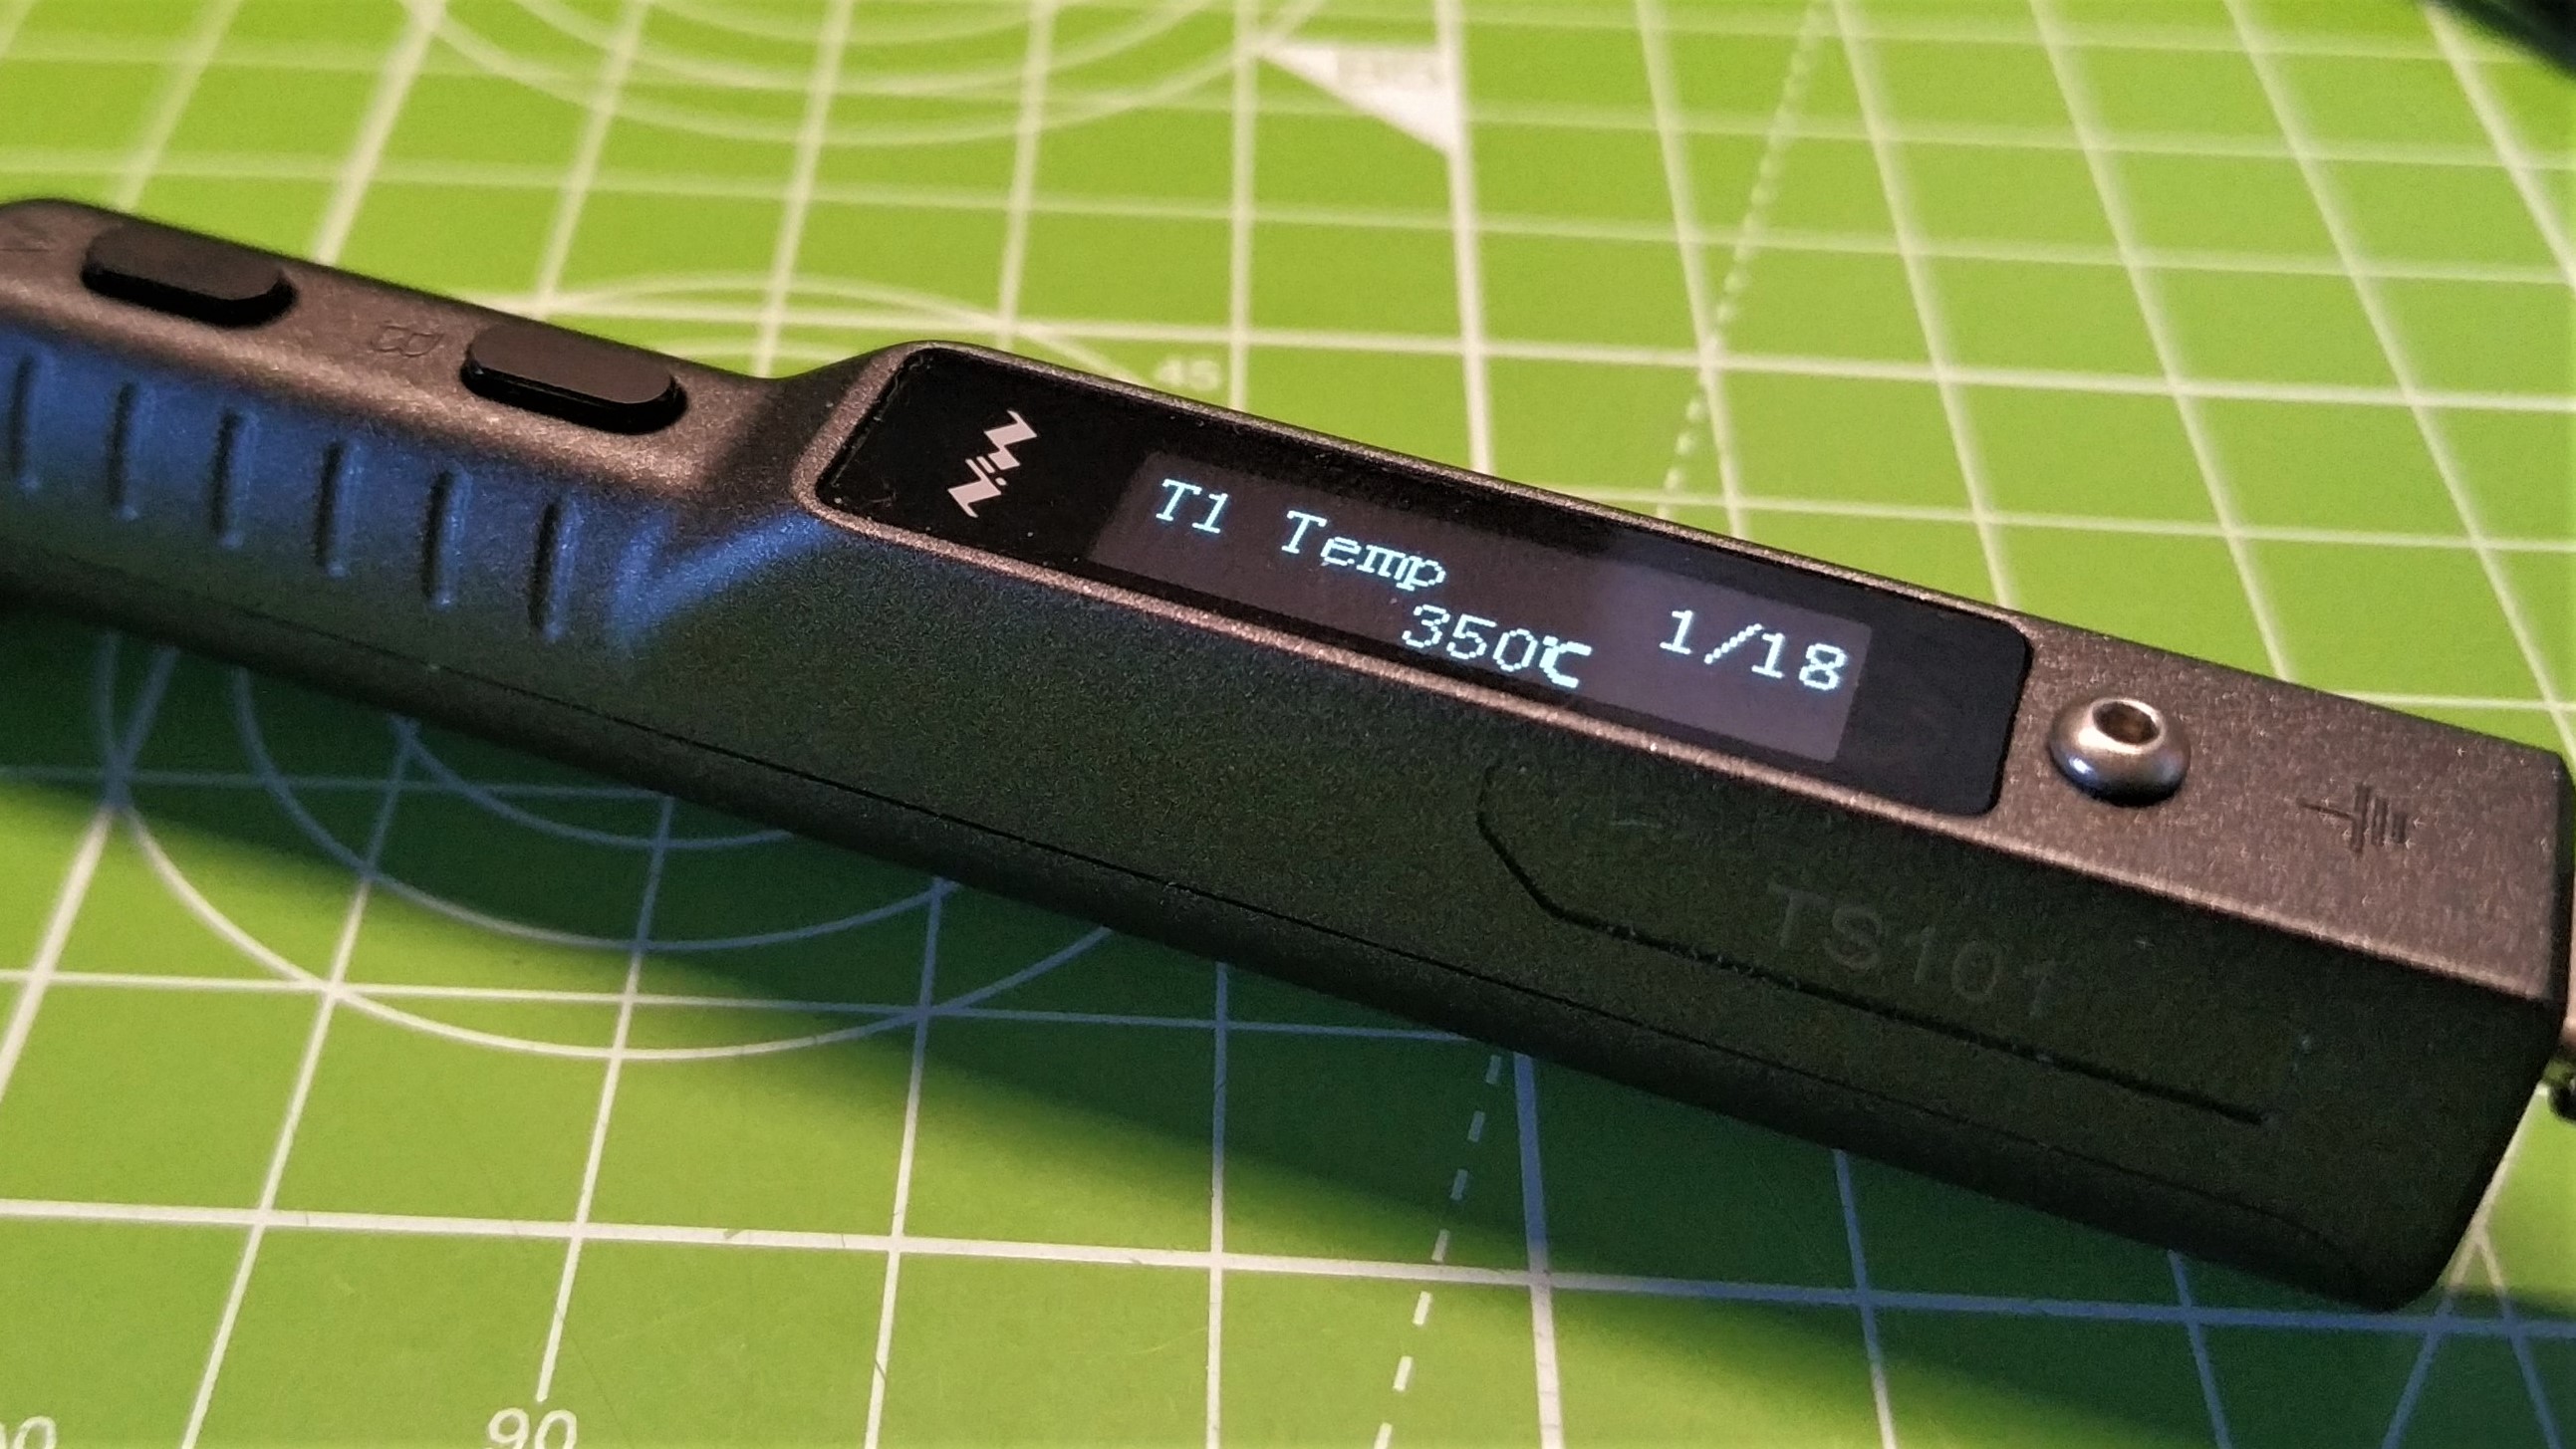 Miniware TS101 Smart Soldering Iron